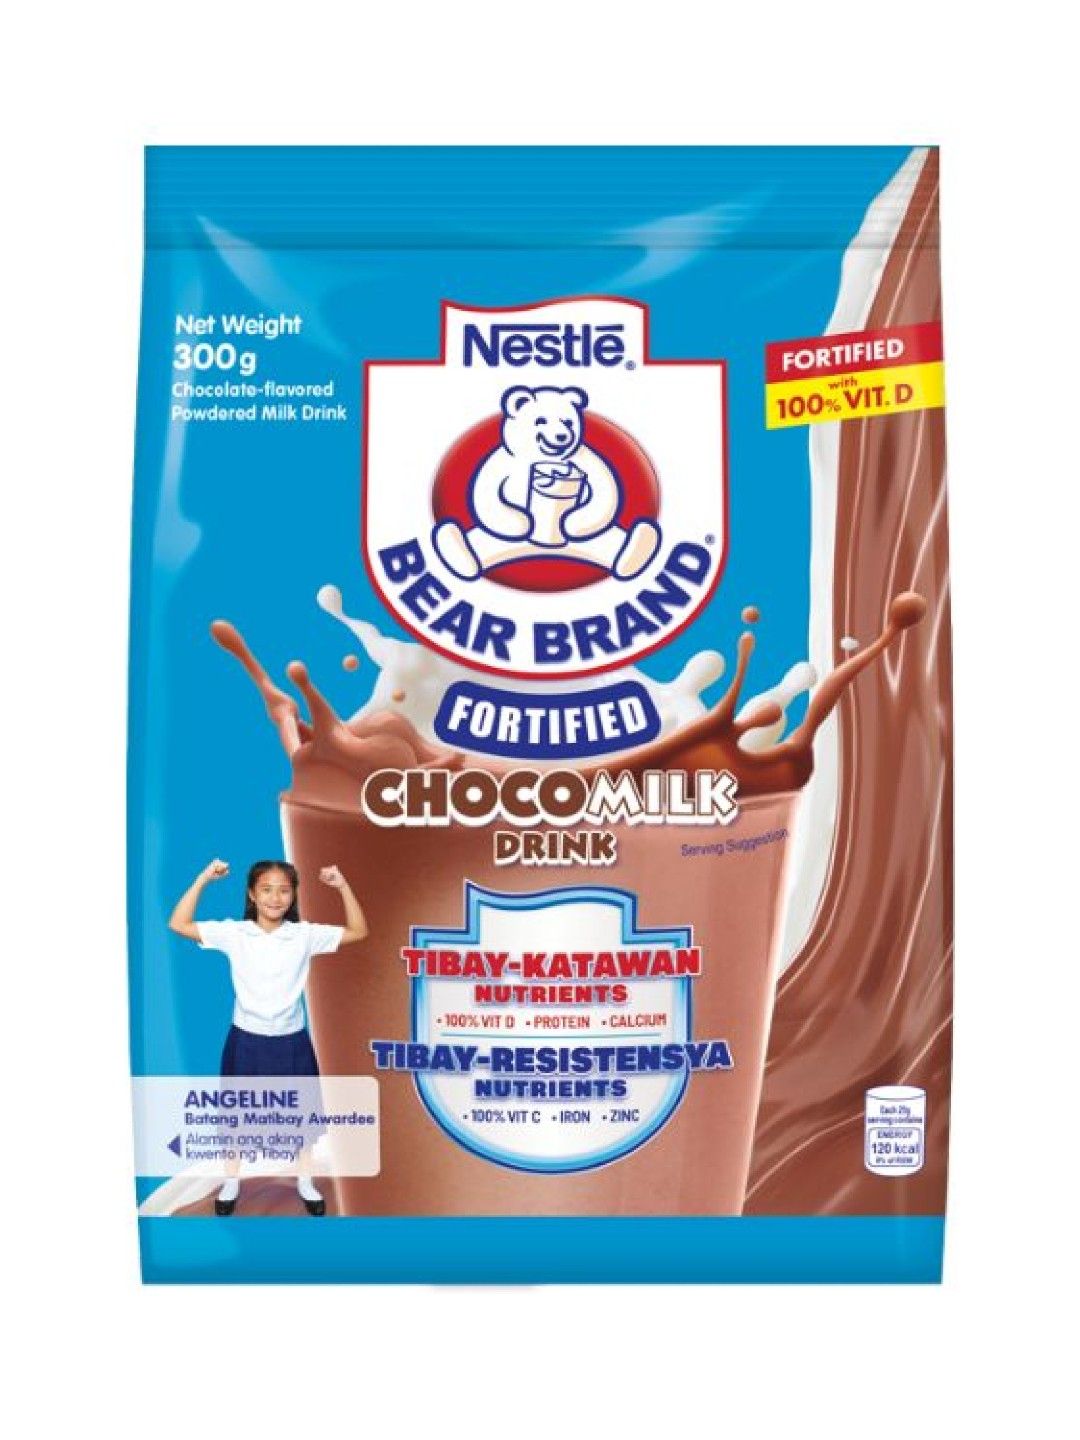 Bear Brand Fortified Choco Milk Drink (300g)